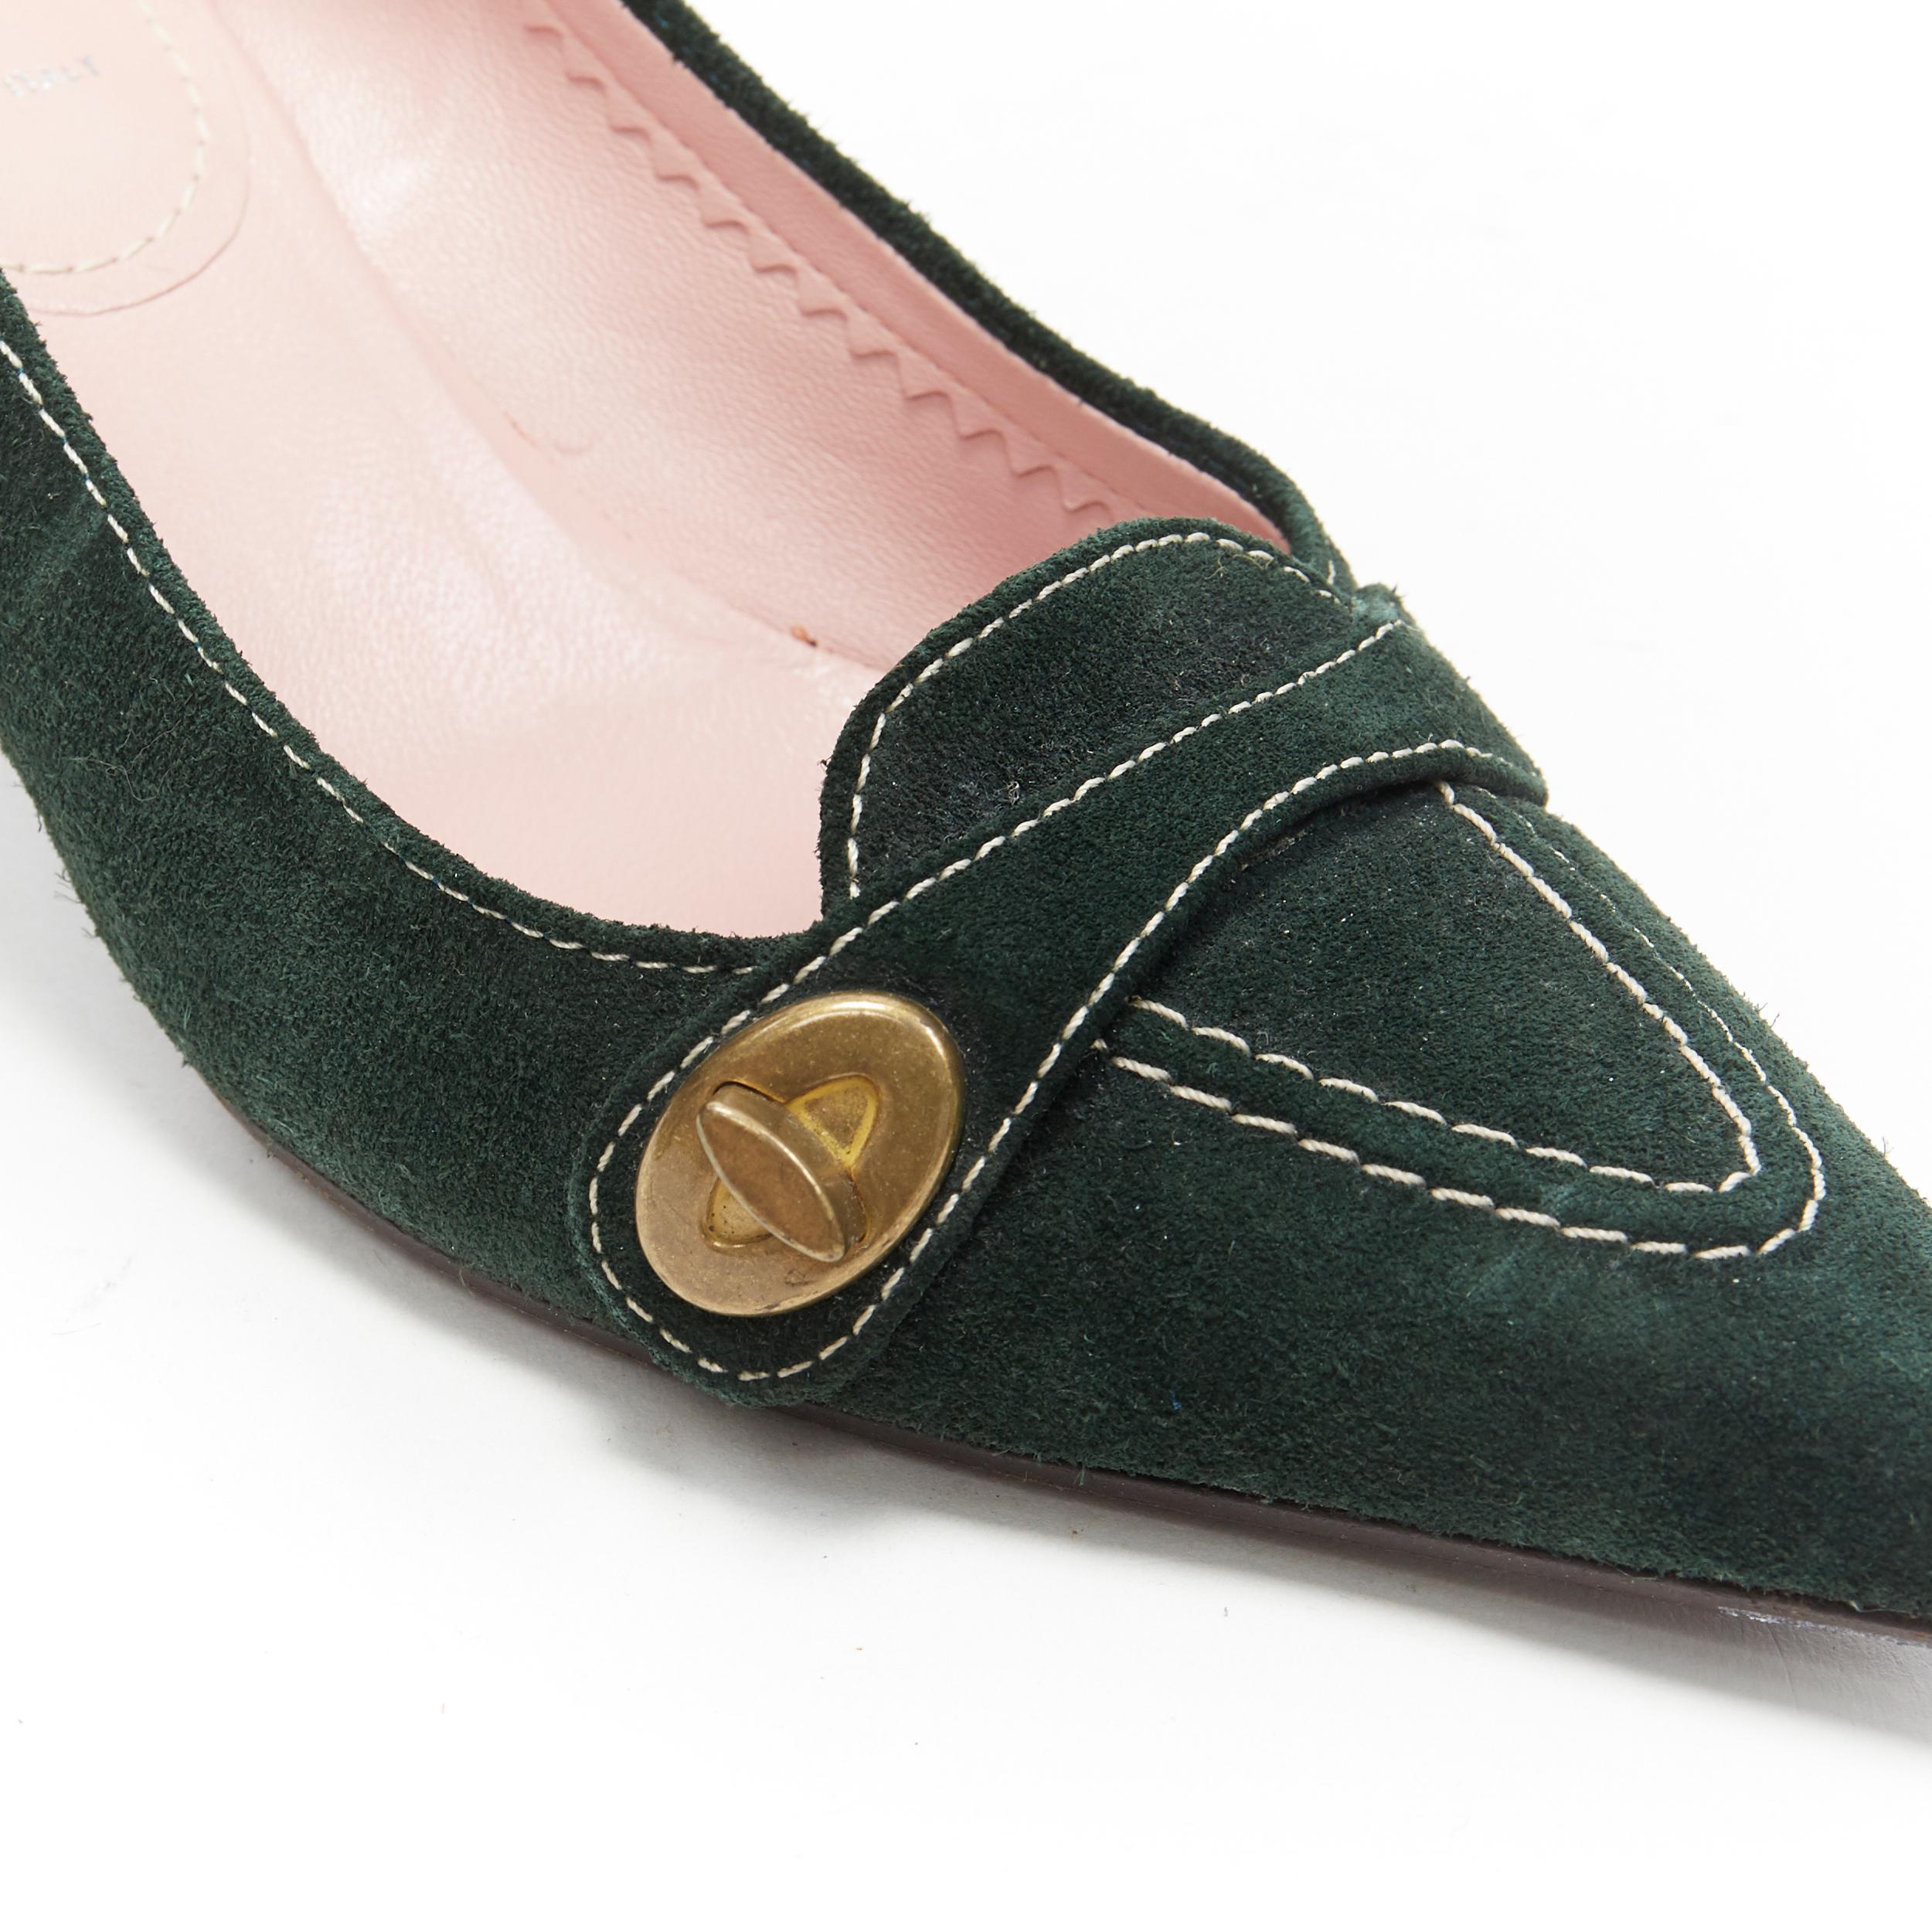 Women's MIU MIU dark green suede leather turn lock detail point toe kitten heel EU37